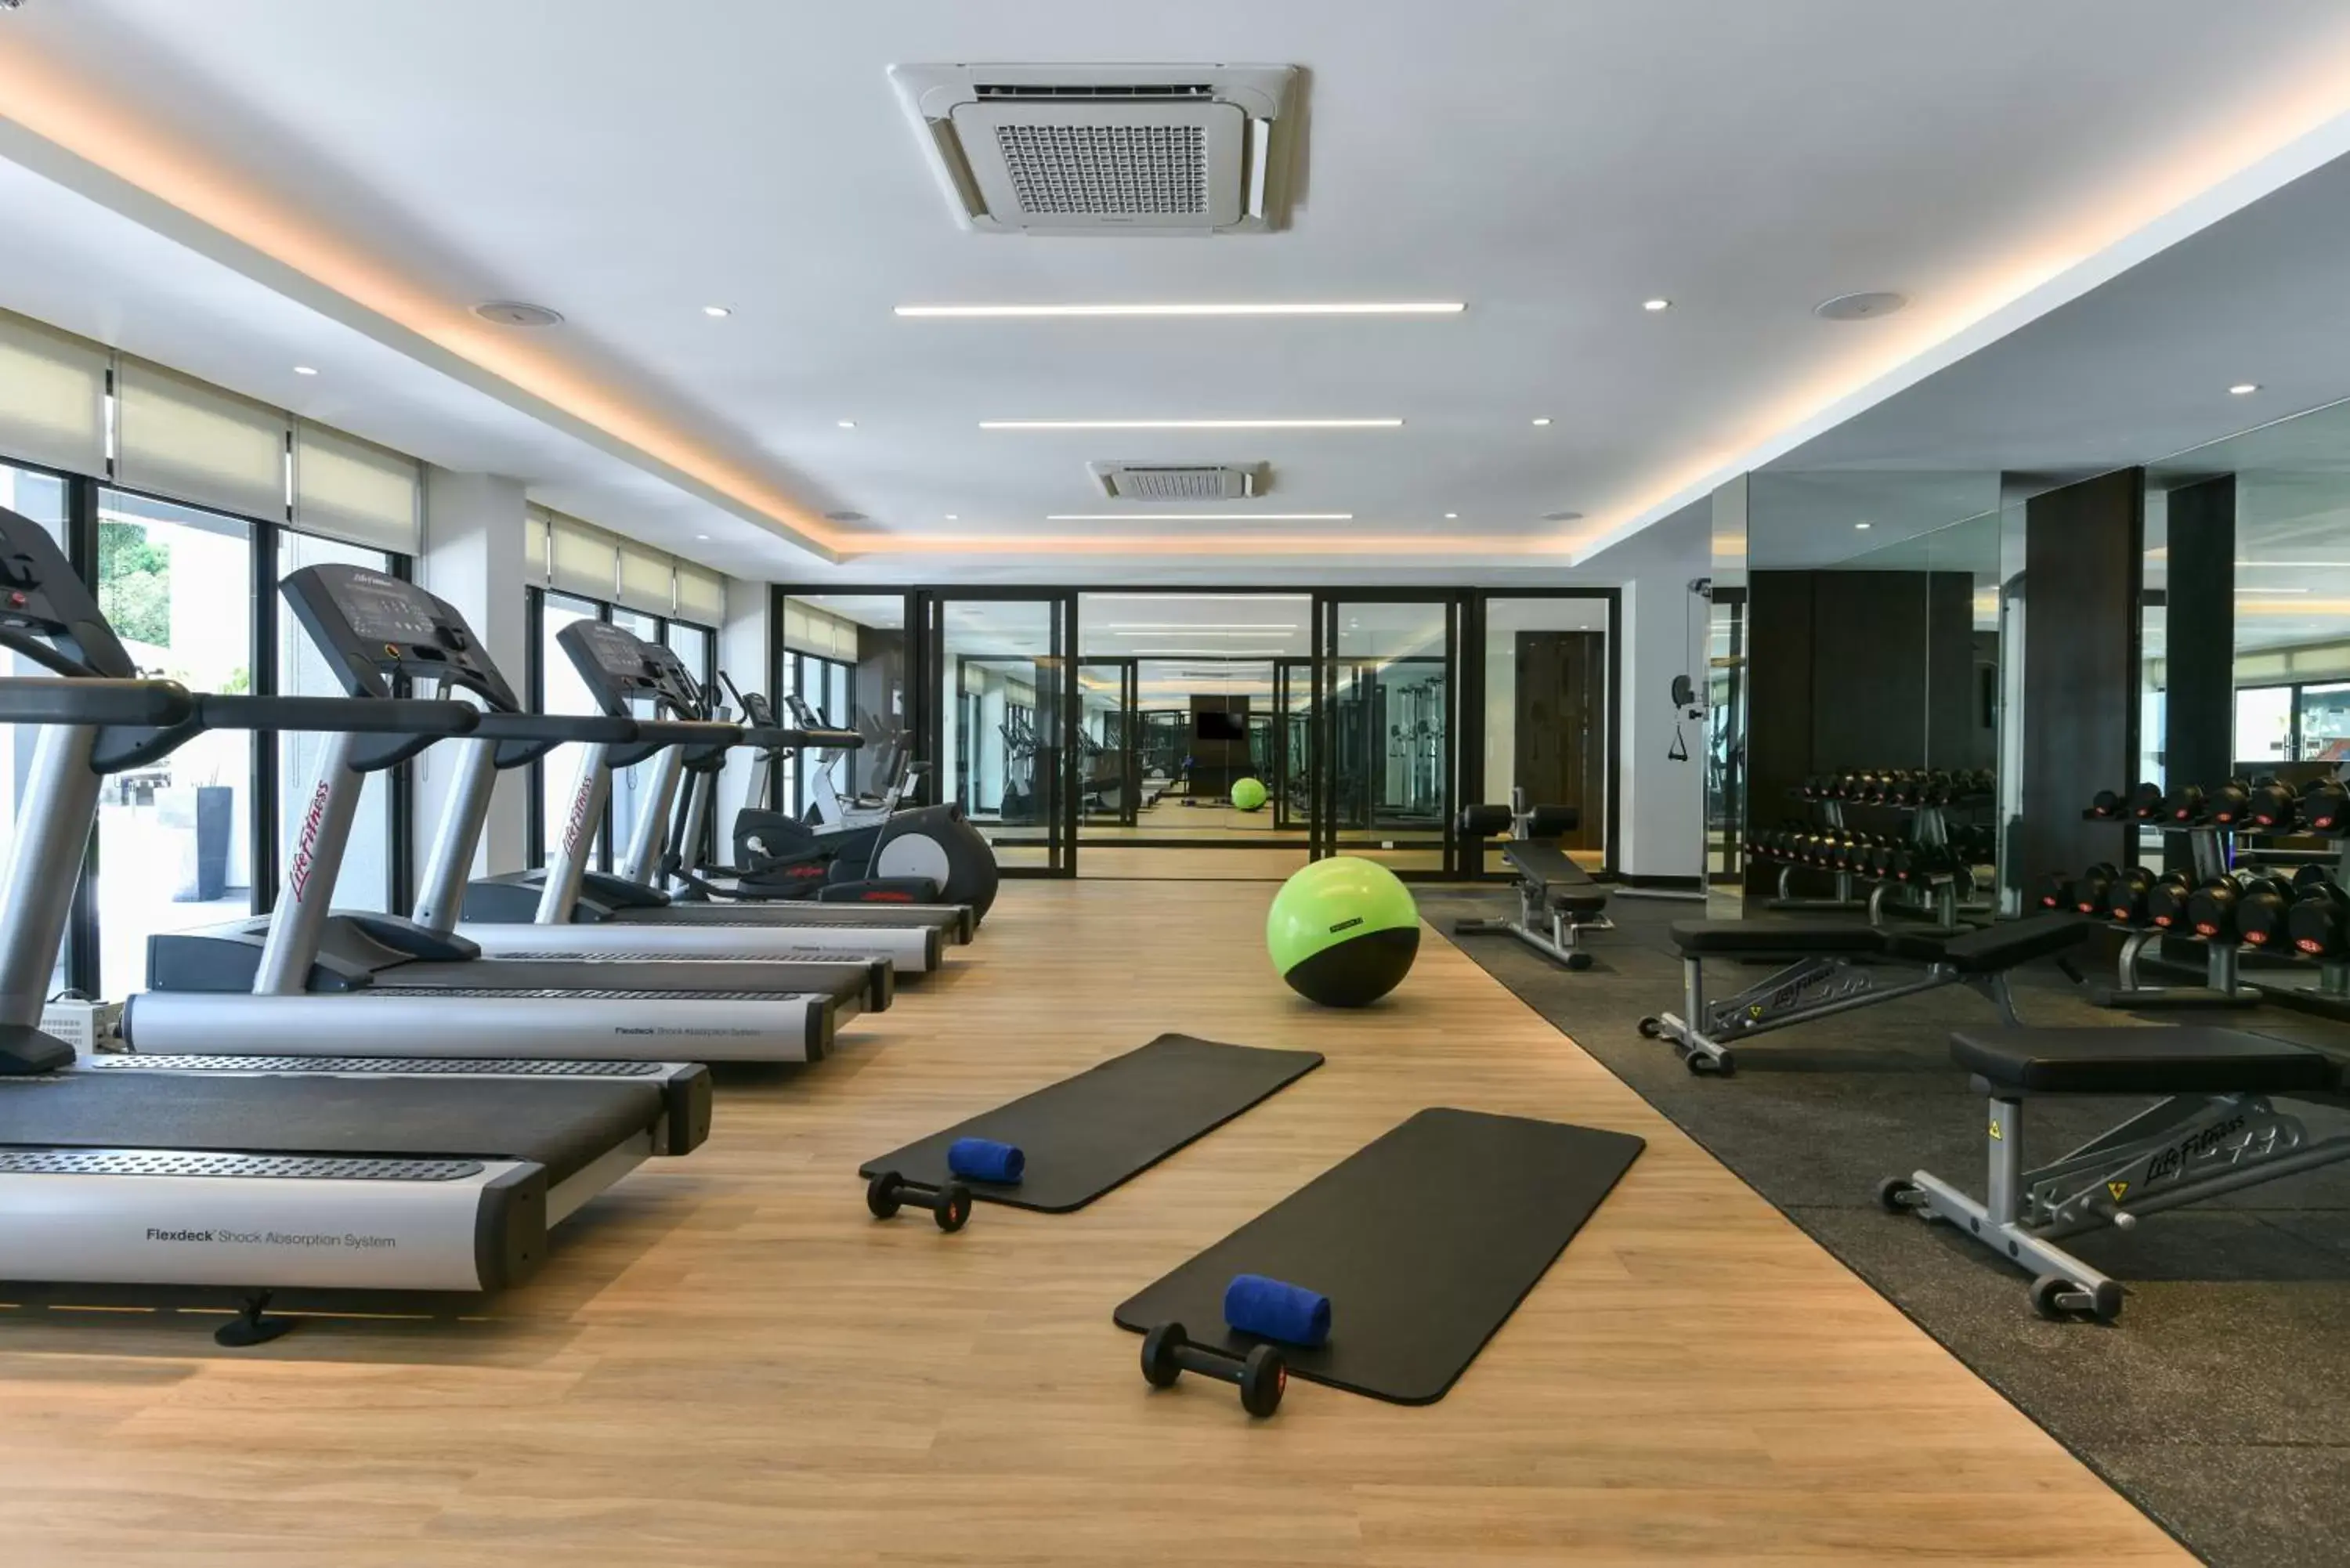 Fitness centre/facilities, Fitness Center/Facilities in Seda Lio